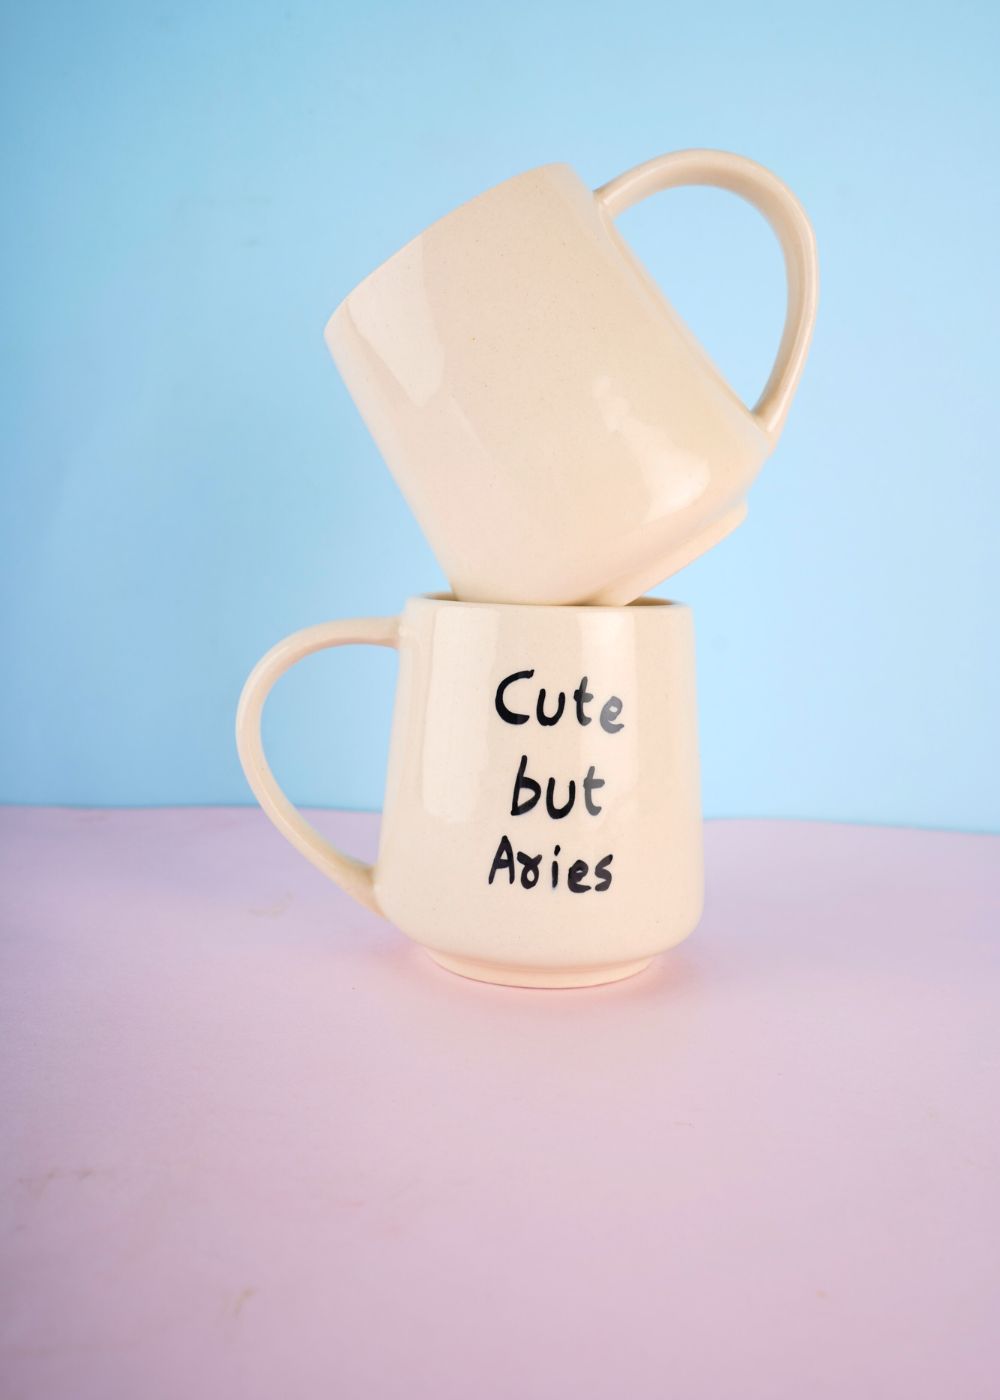 cute but aries mug handmade in india